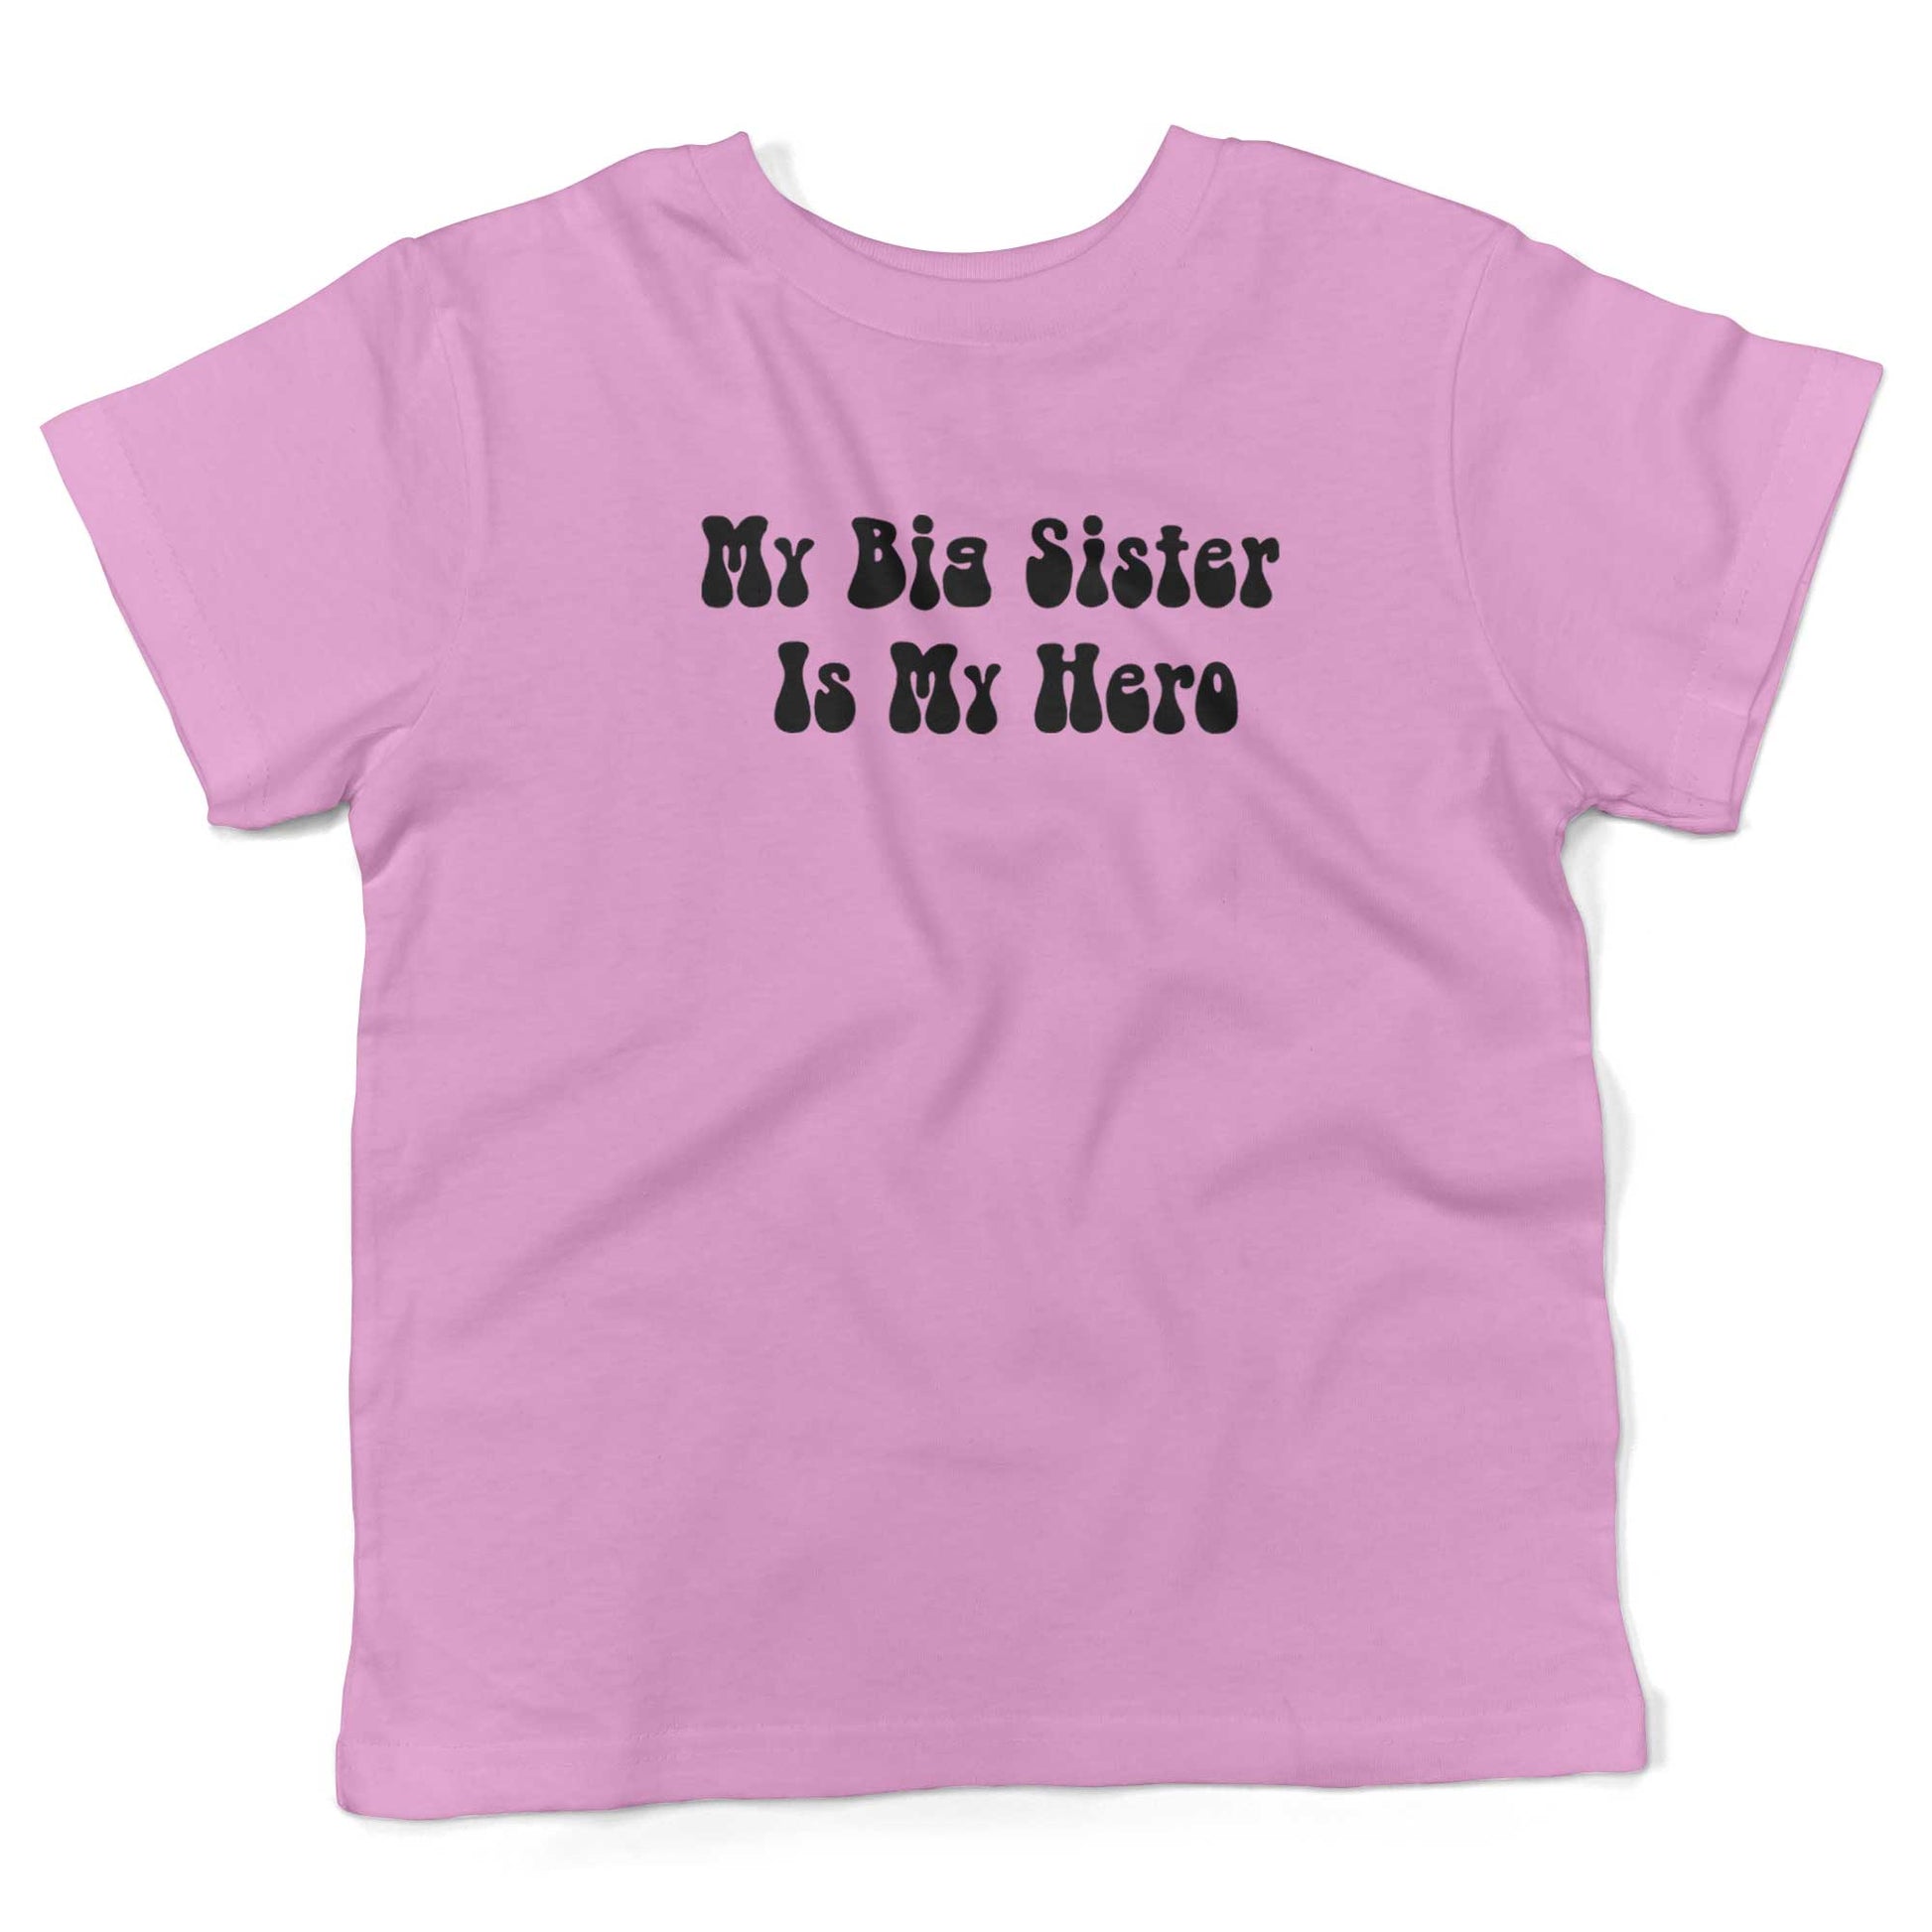 My Big Sister Is My Hero Toddler Shirt-Organic Pink-2T